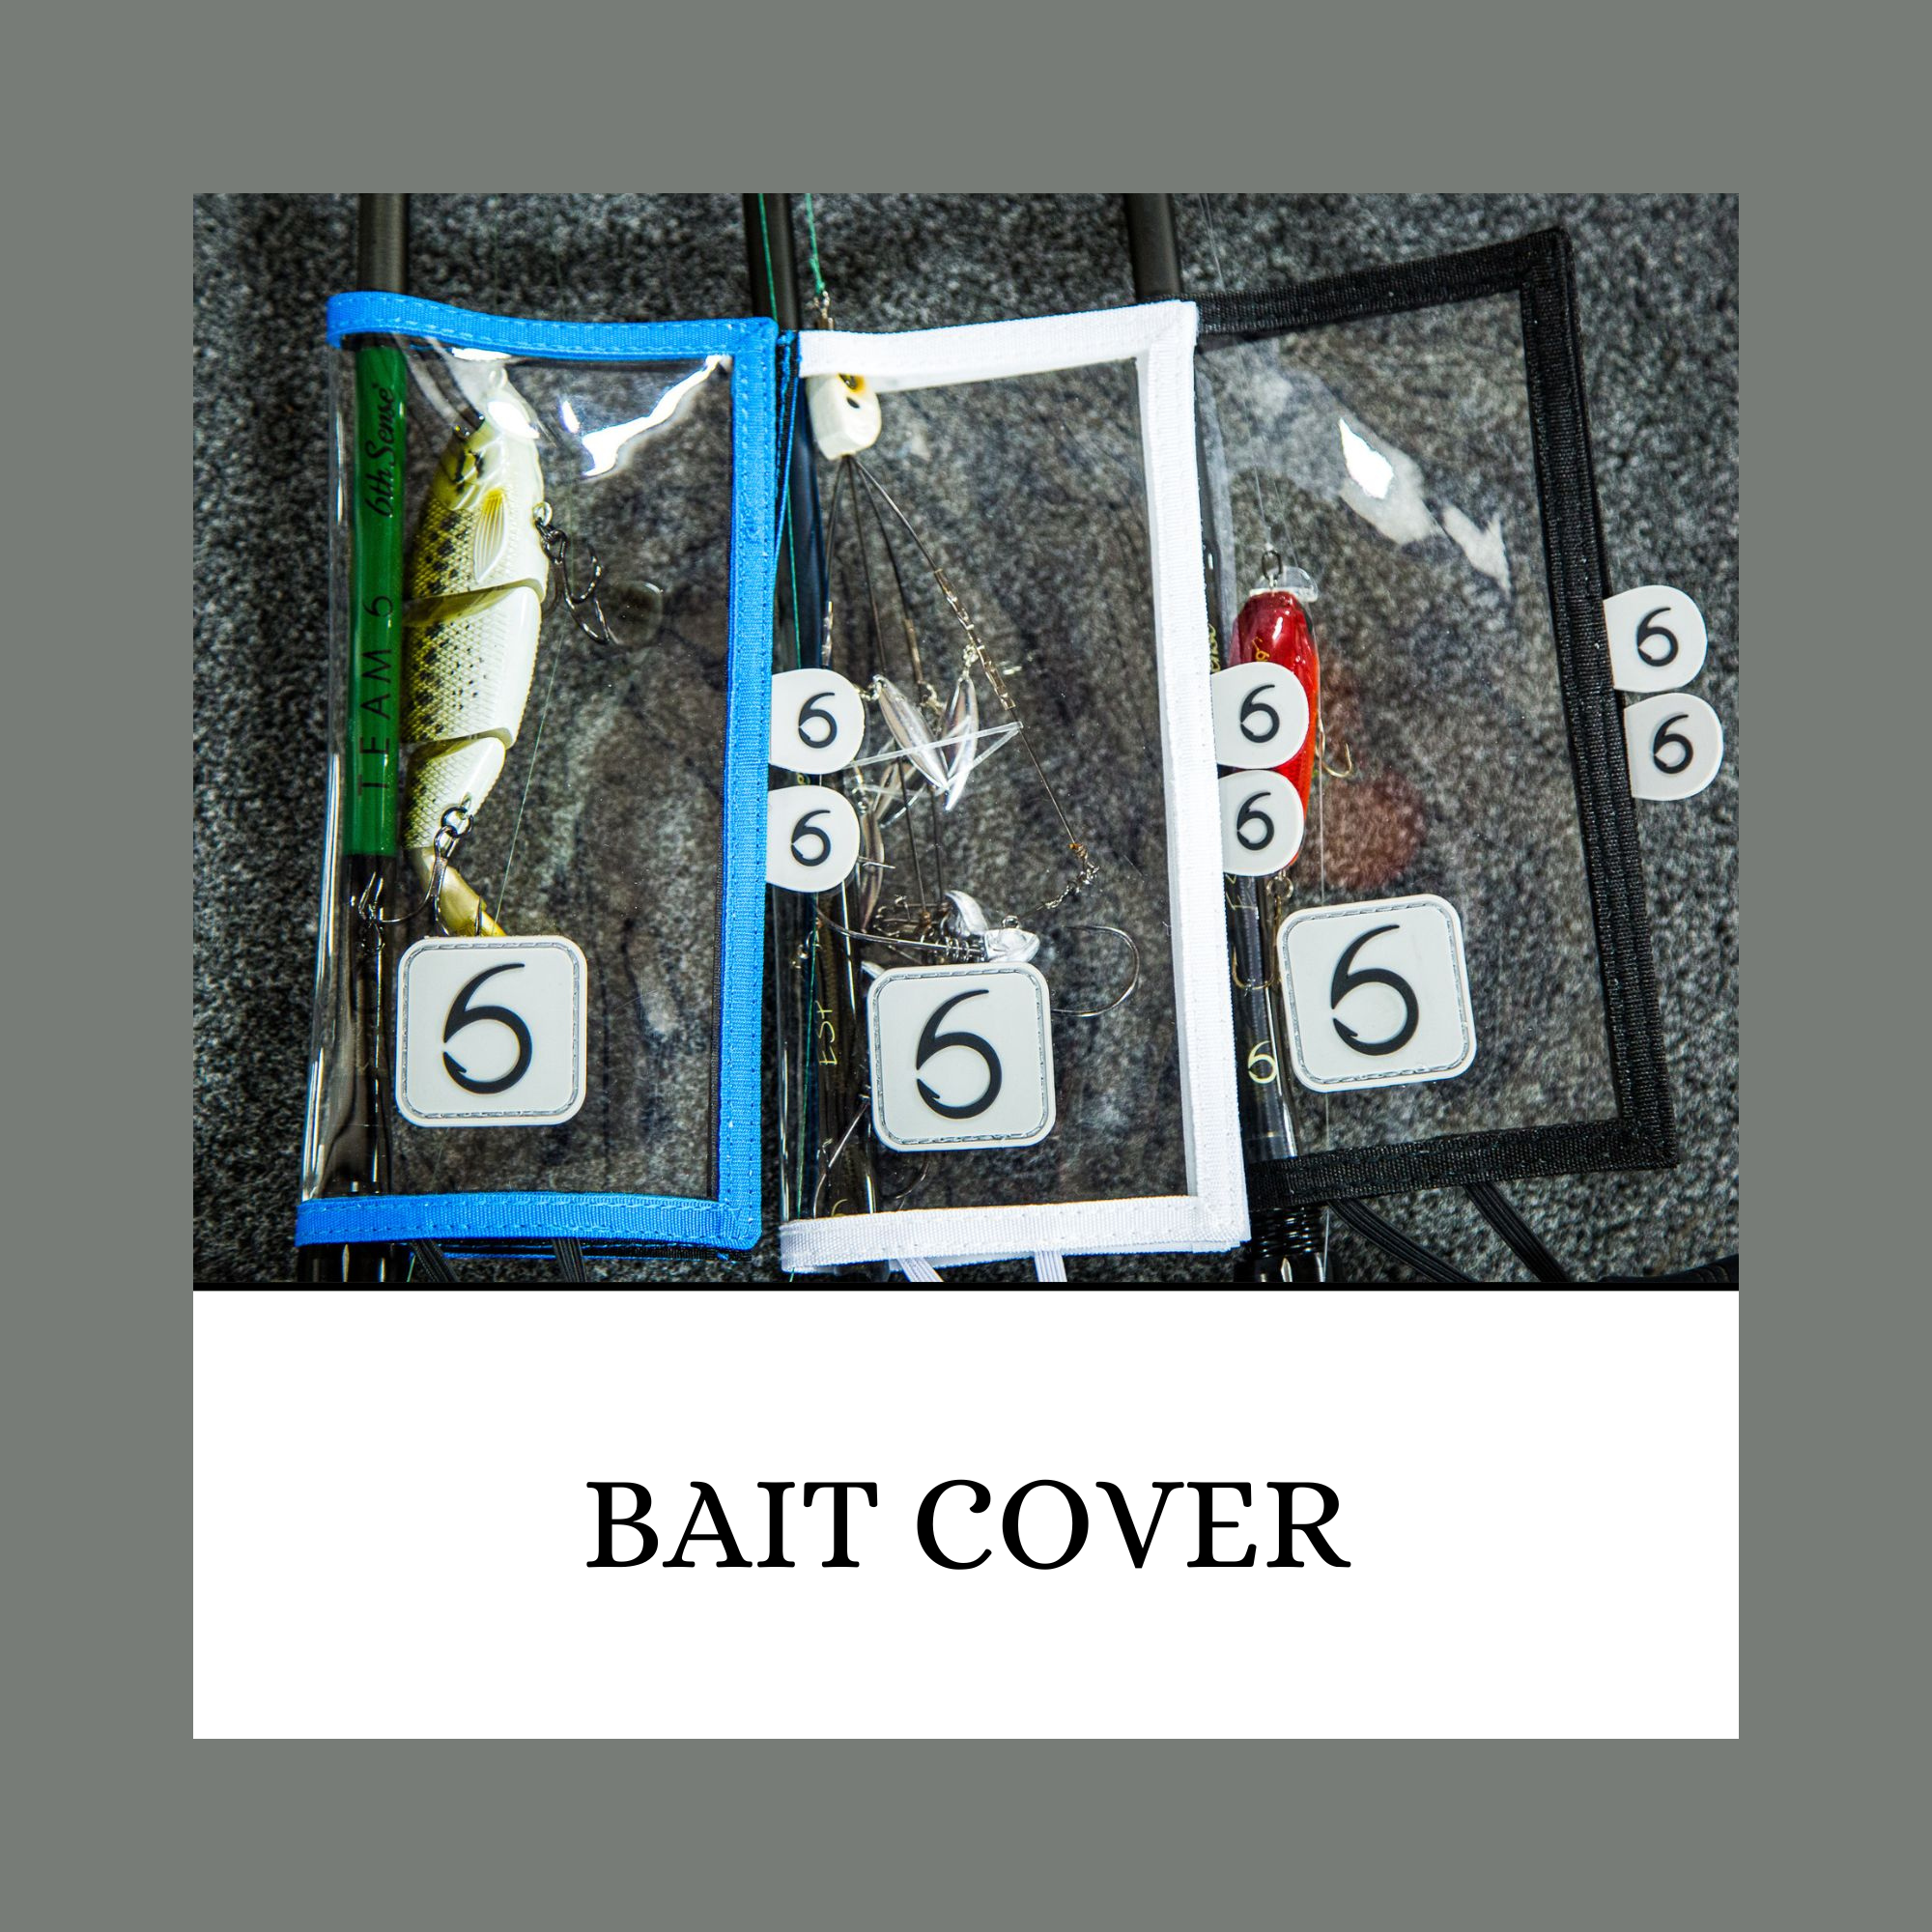 Bait Cover, 6th Sense Fishing, Fishing Accessories, Store